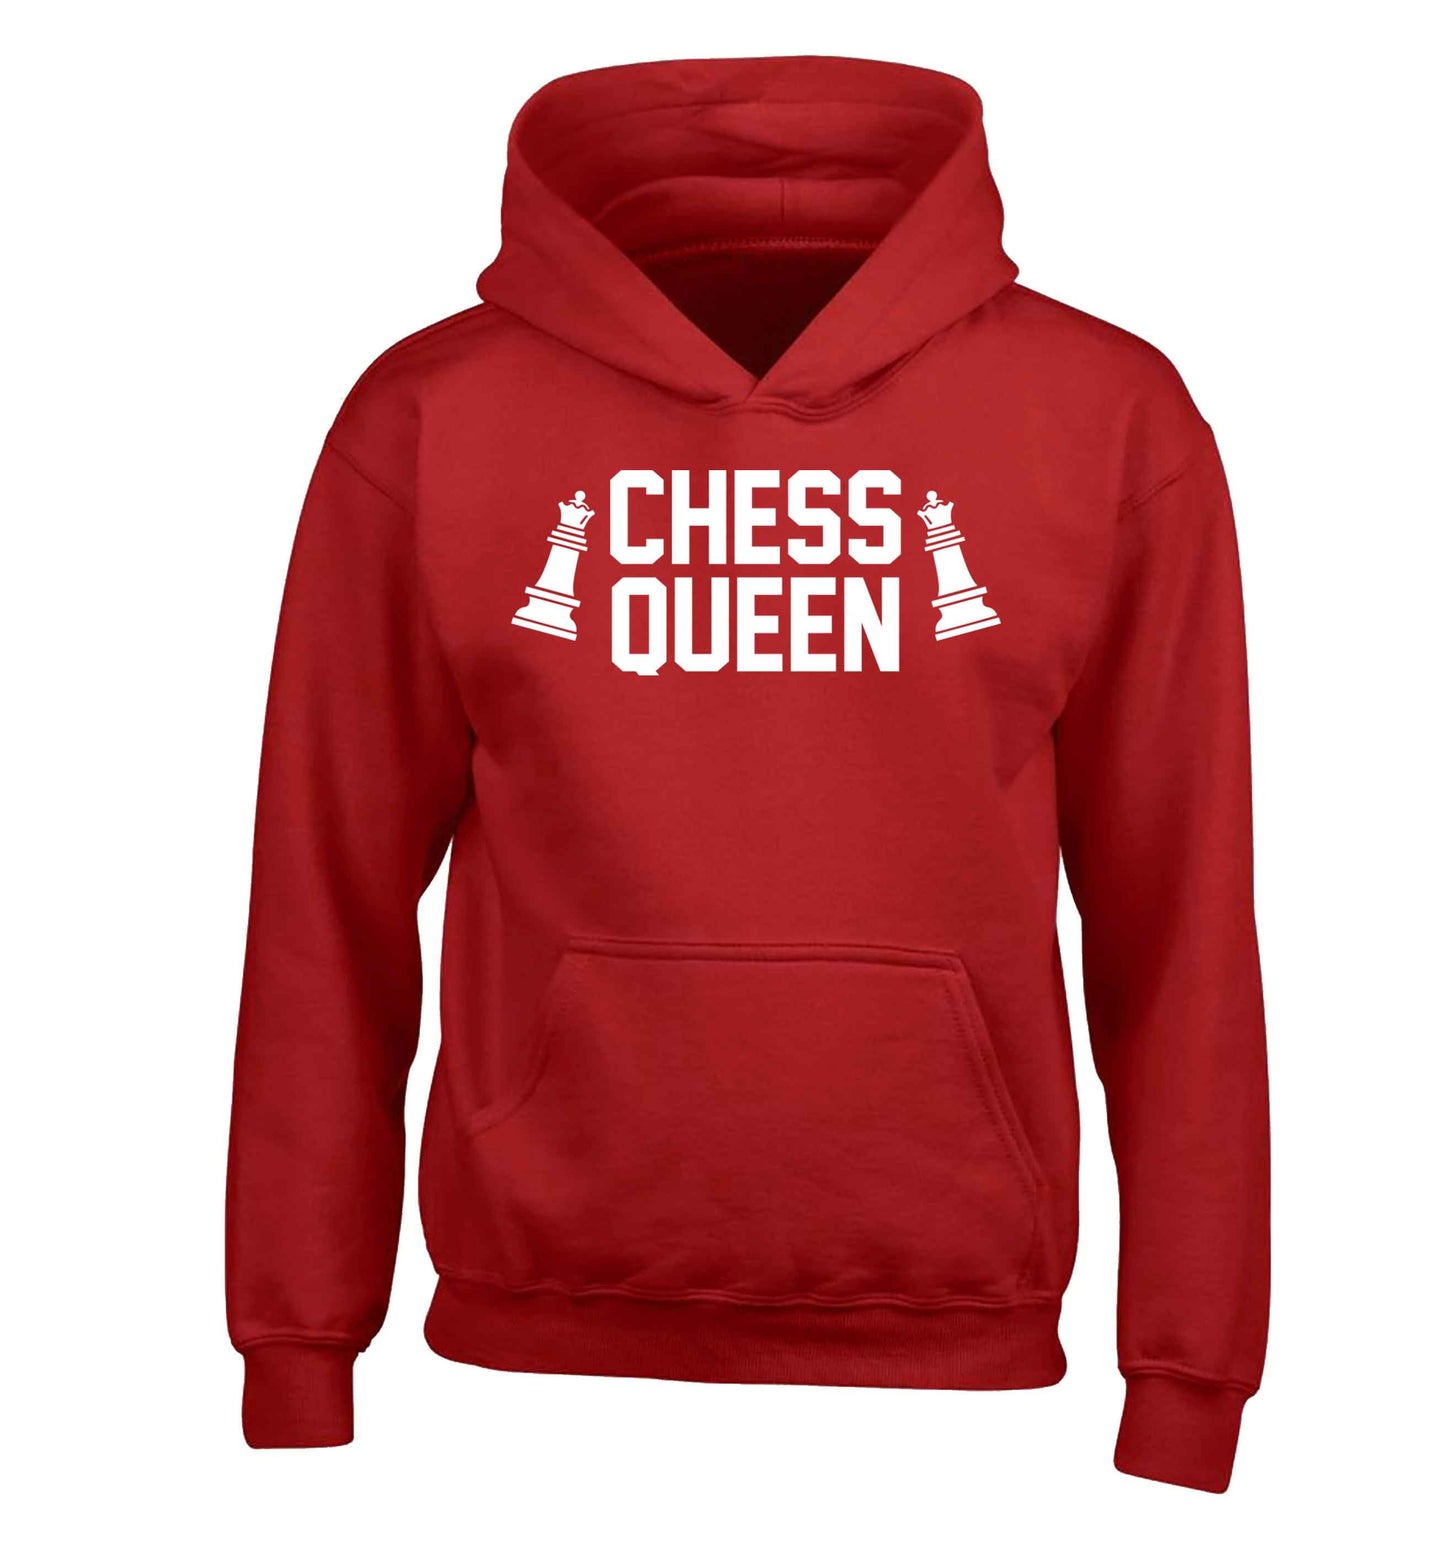 Chess queen children's red hoodie 12-13 Years